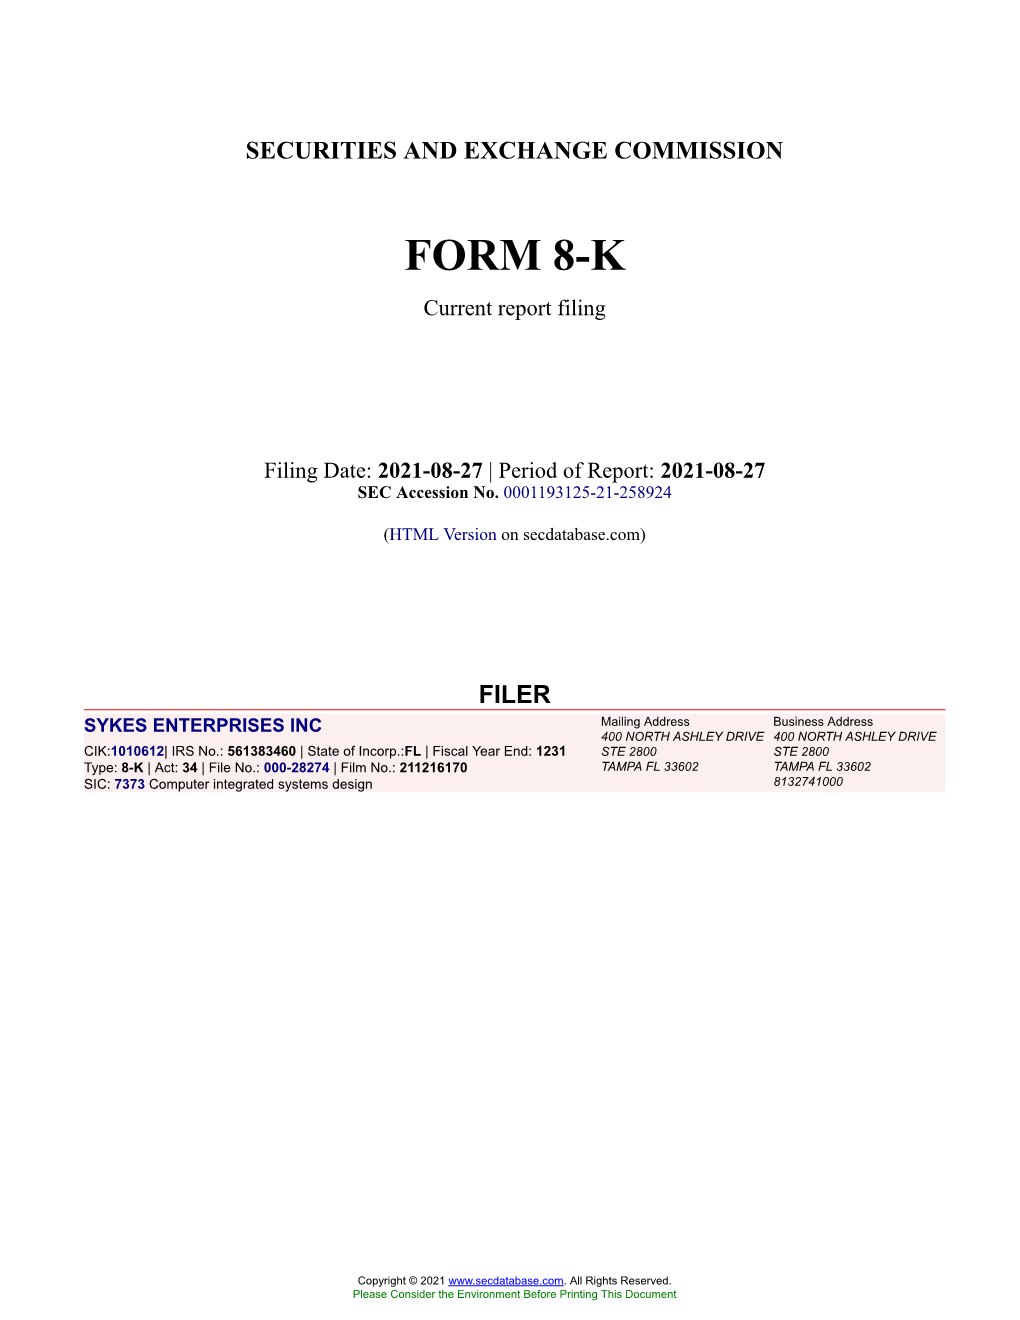 SYKES ENTERPRISES INC Form 8-K Current Event Report Filed 2021-08